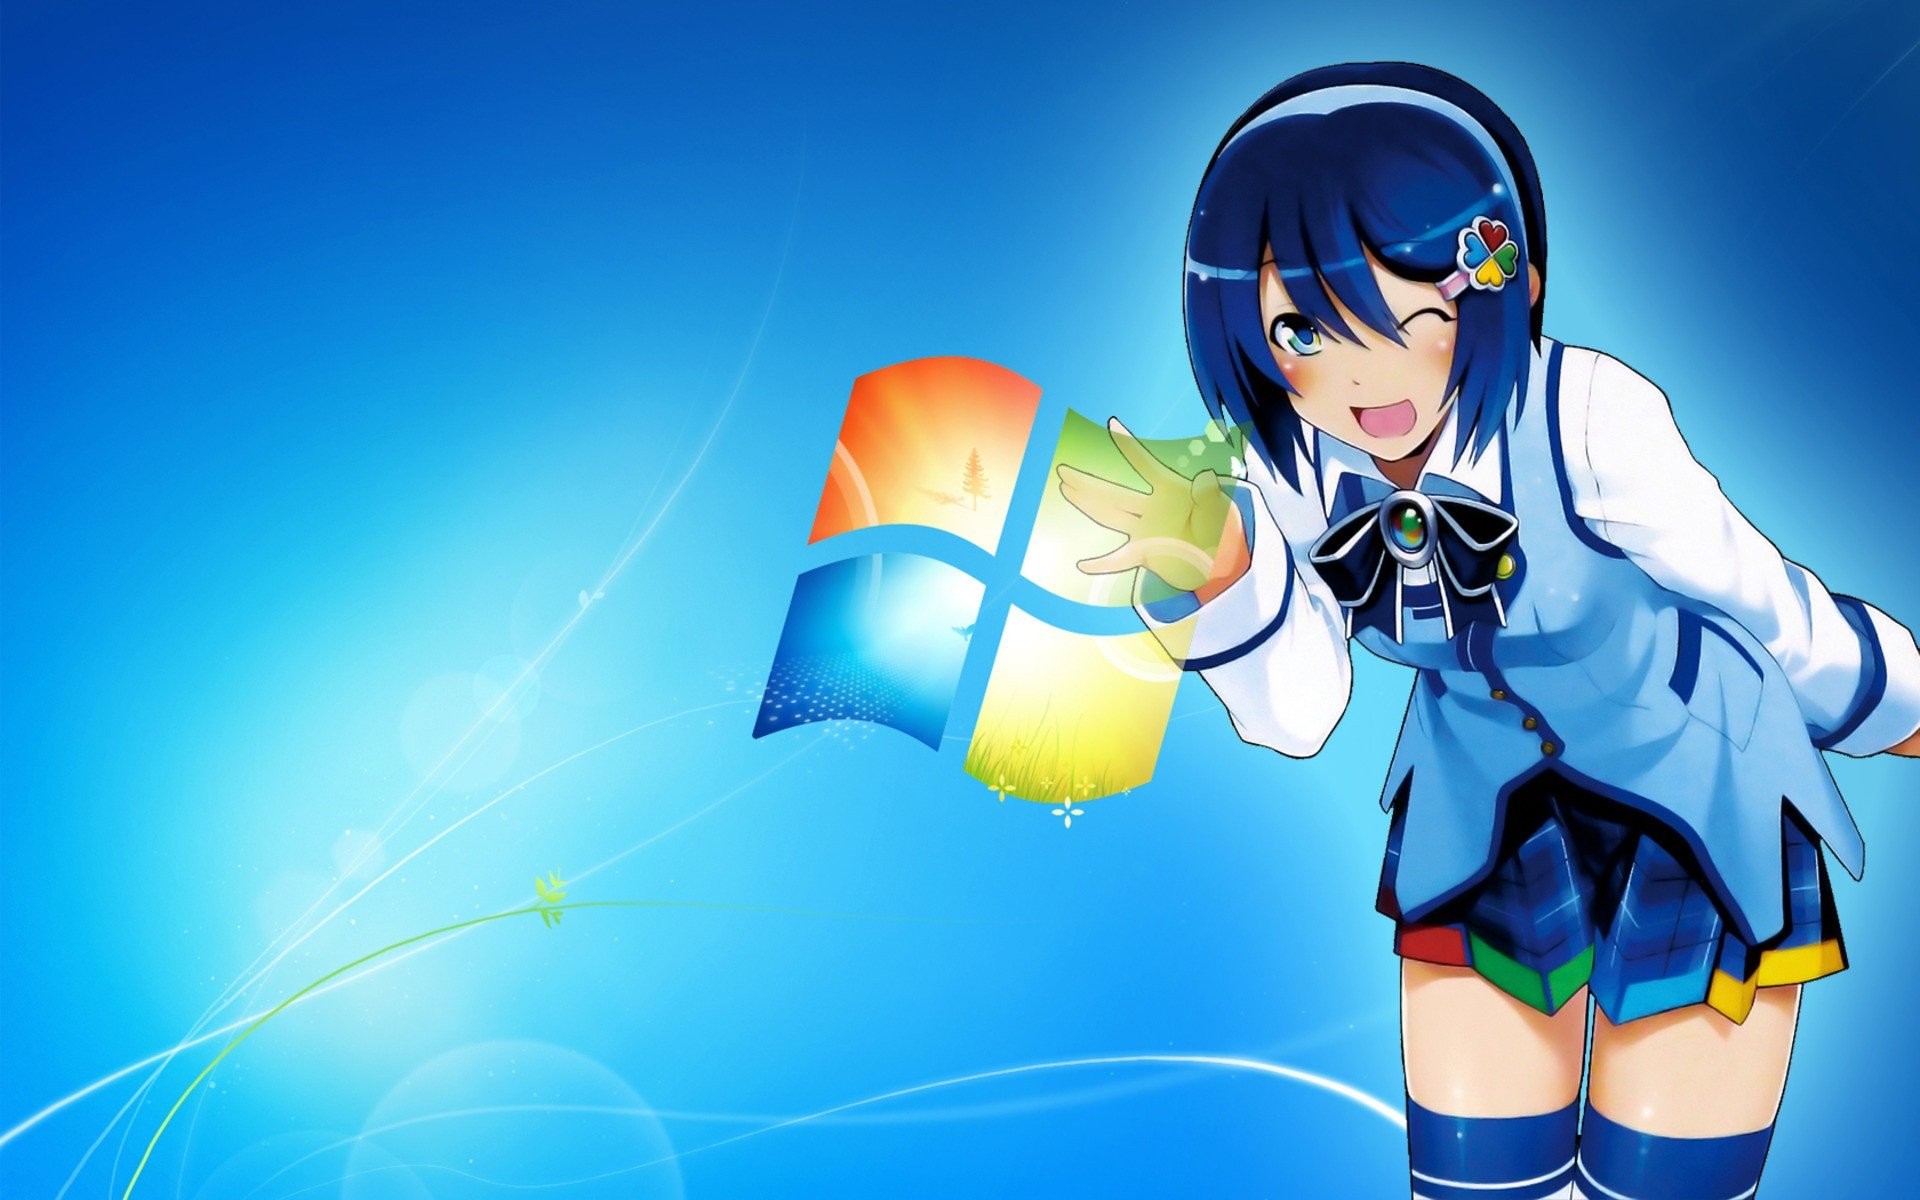 46+] Anime Girl Wallpaper Windows 10 - WallpaperSafari